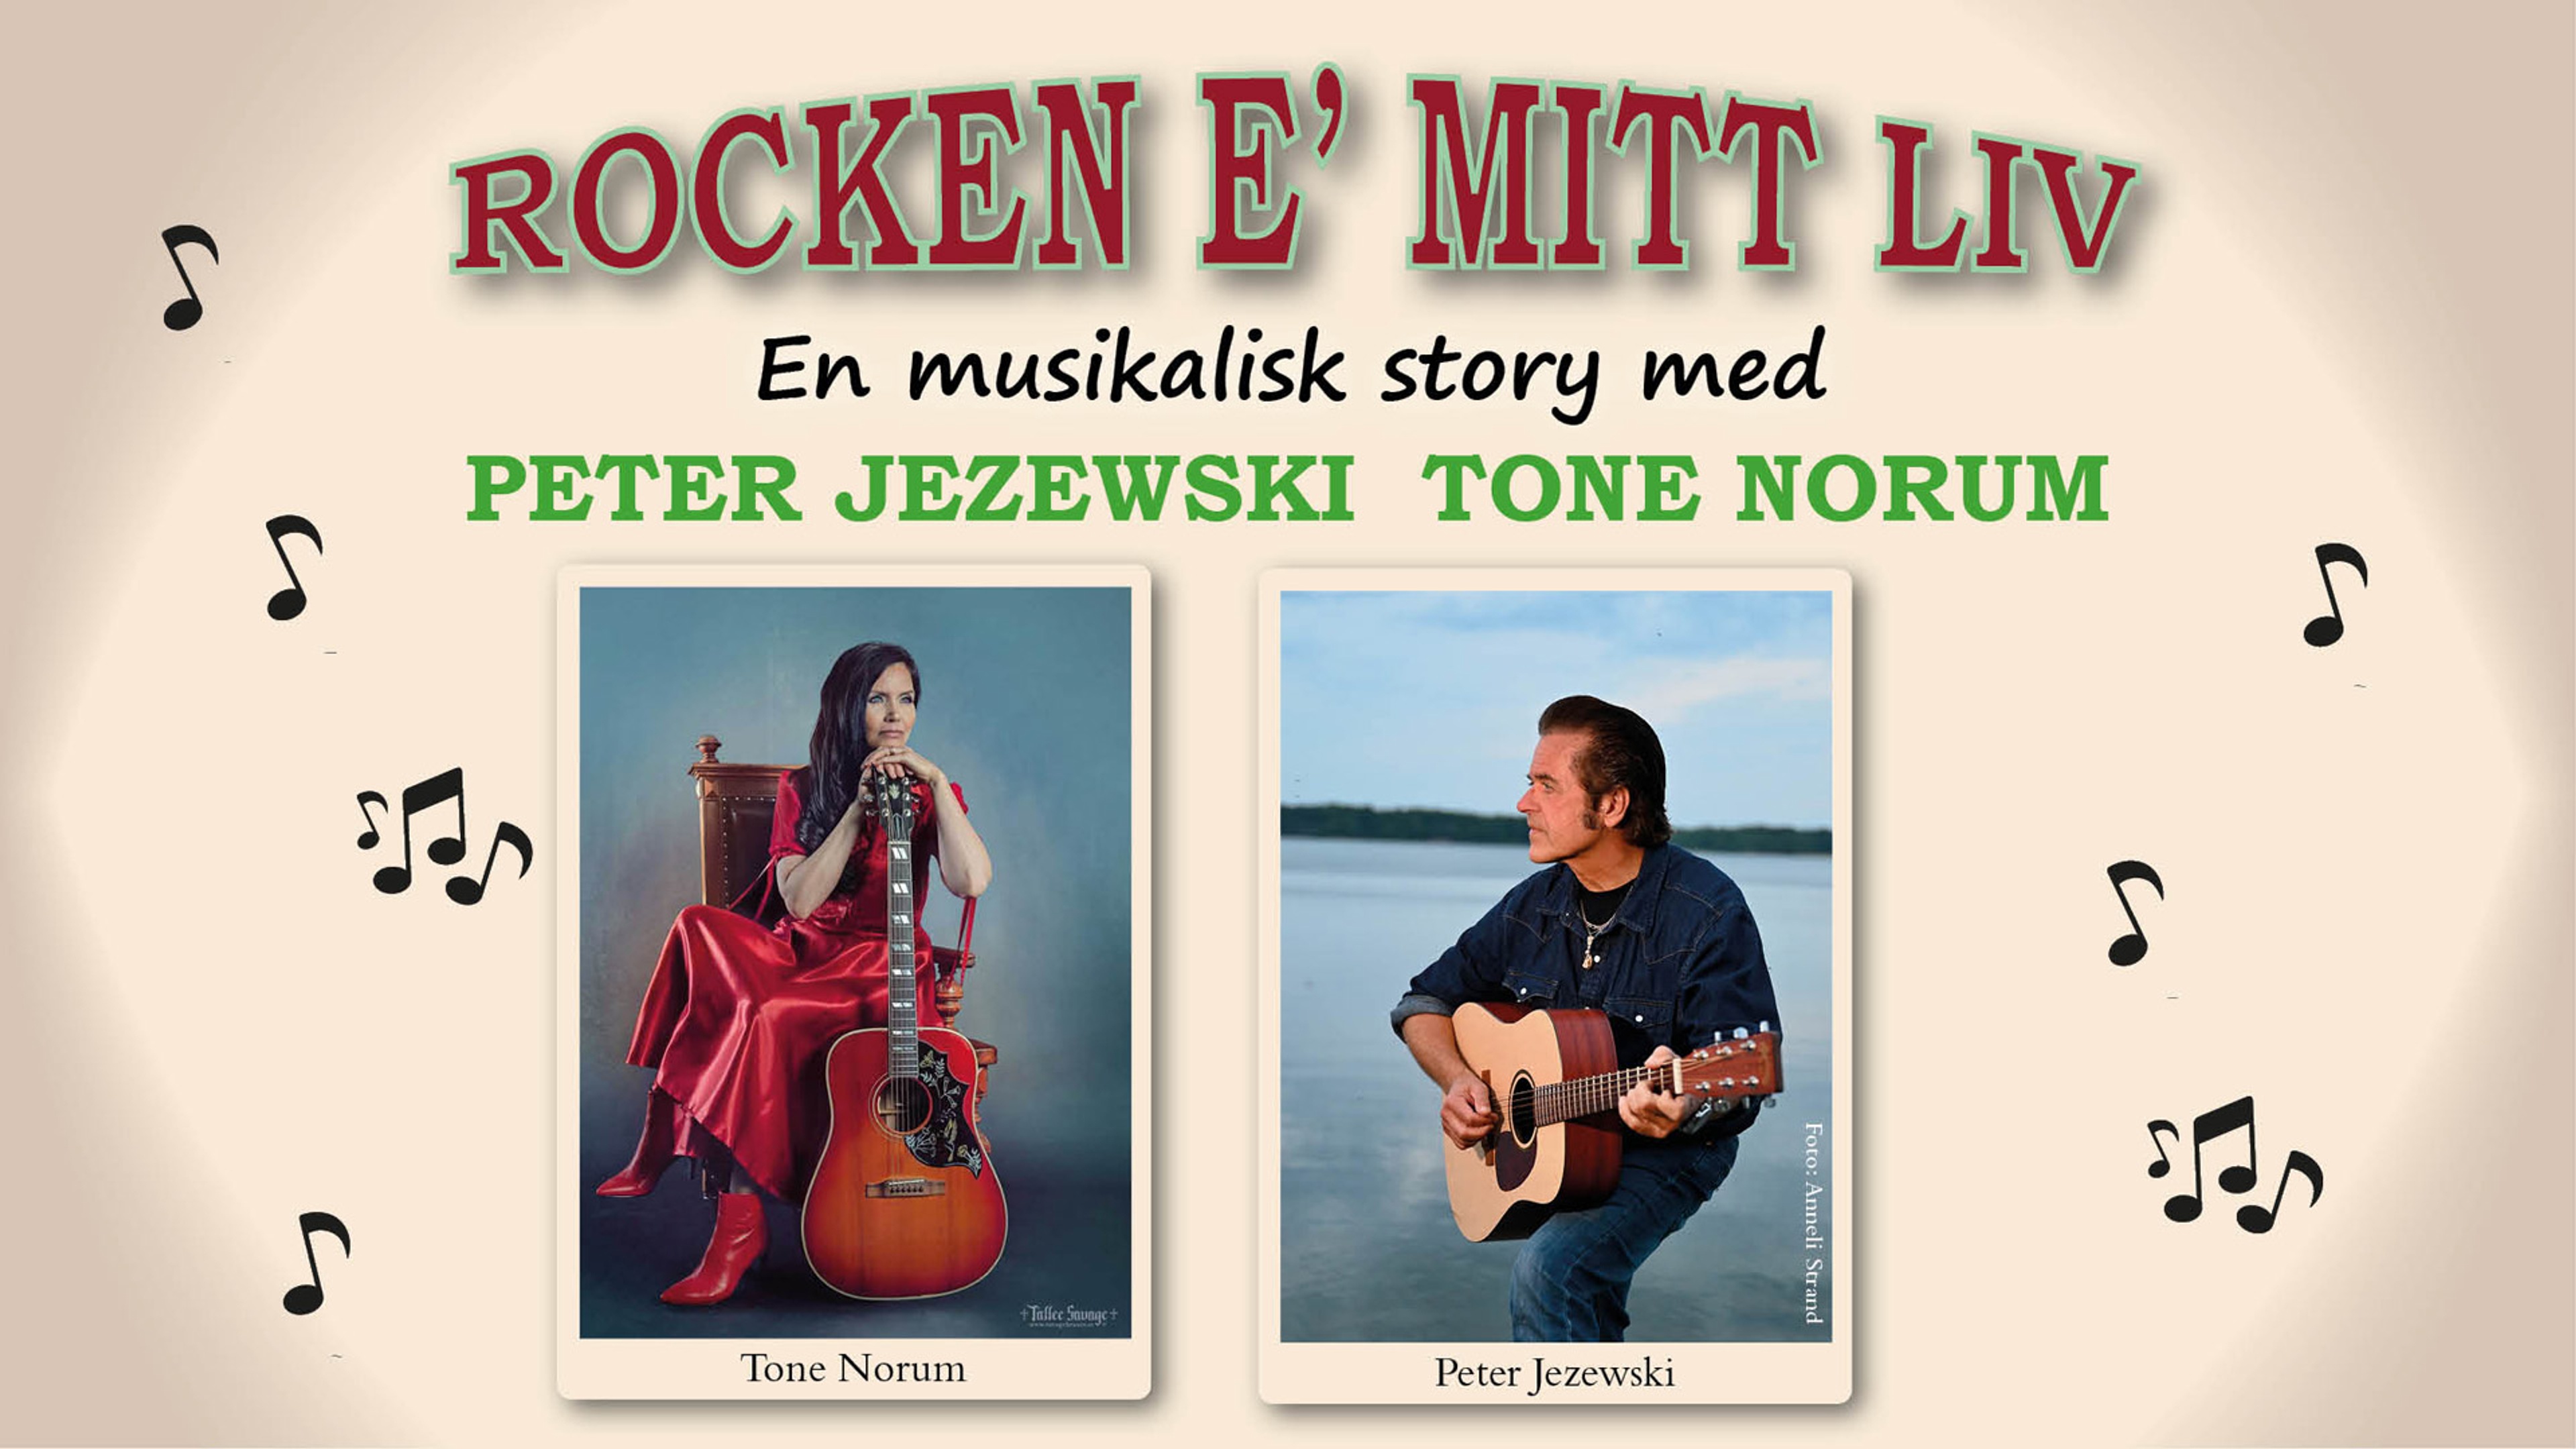 Text: Rocken e mitt liv. En musikalisk story med Peter Jezewski och Tone Norum.